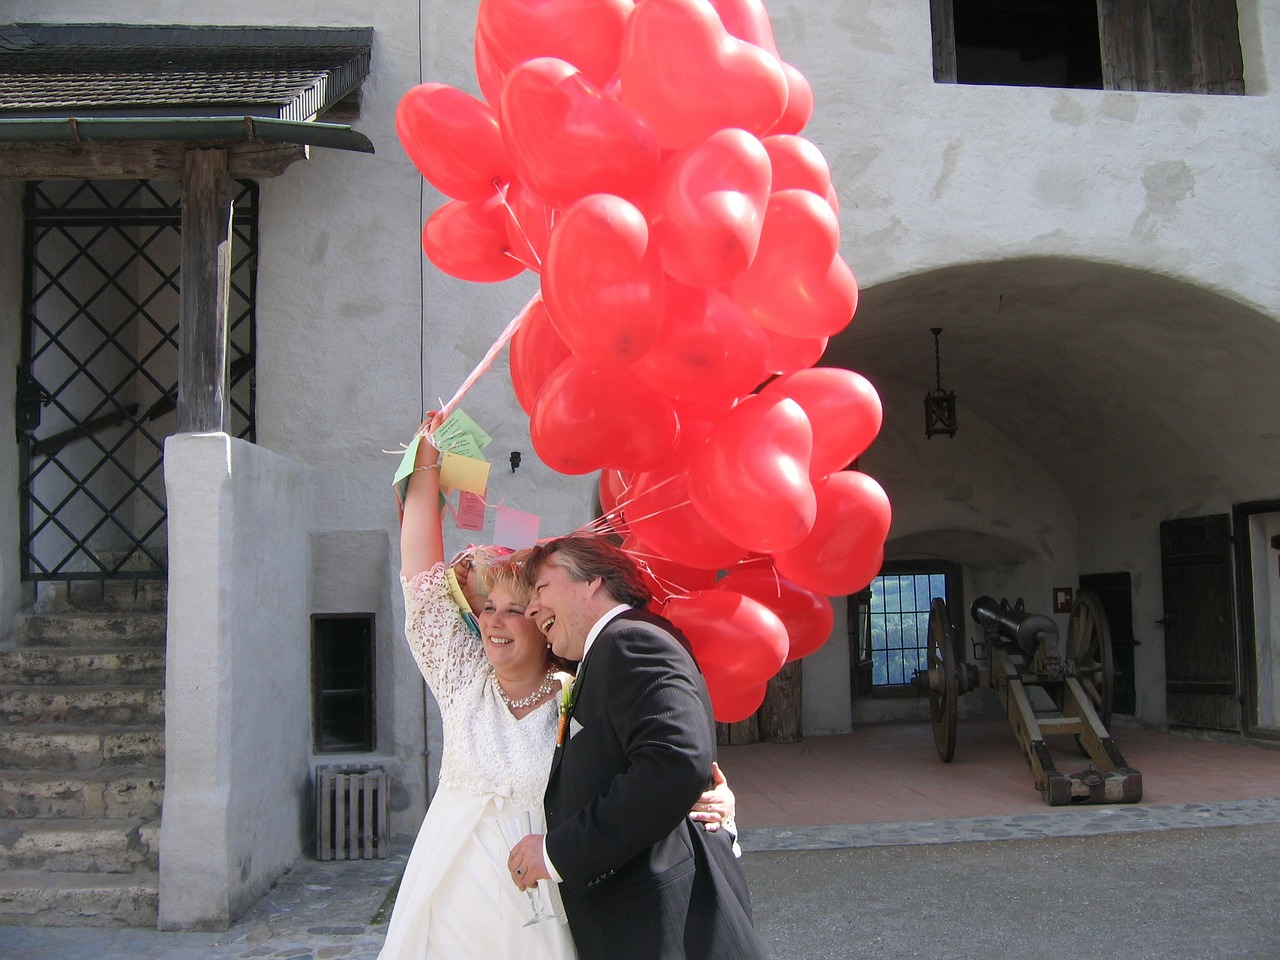 balloon bride and groom wedding free photo